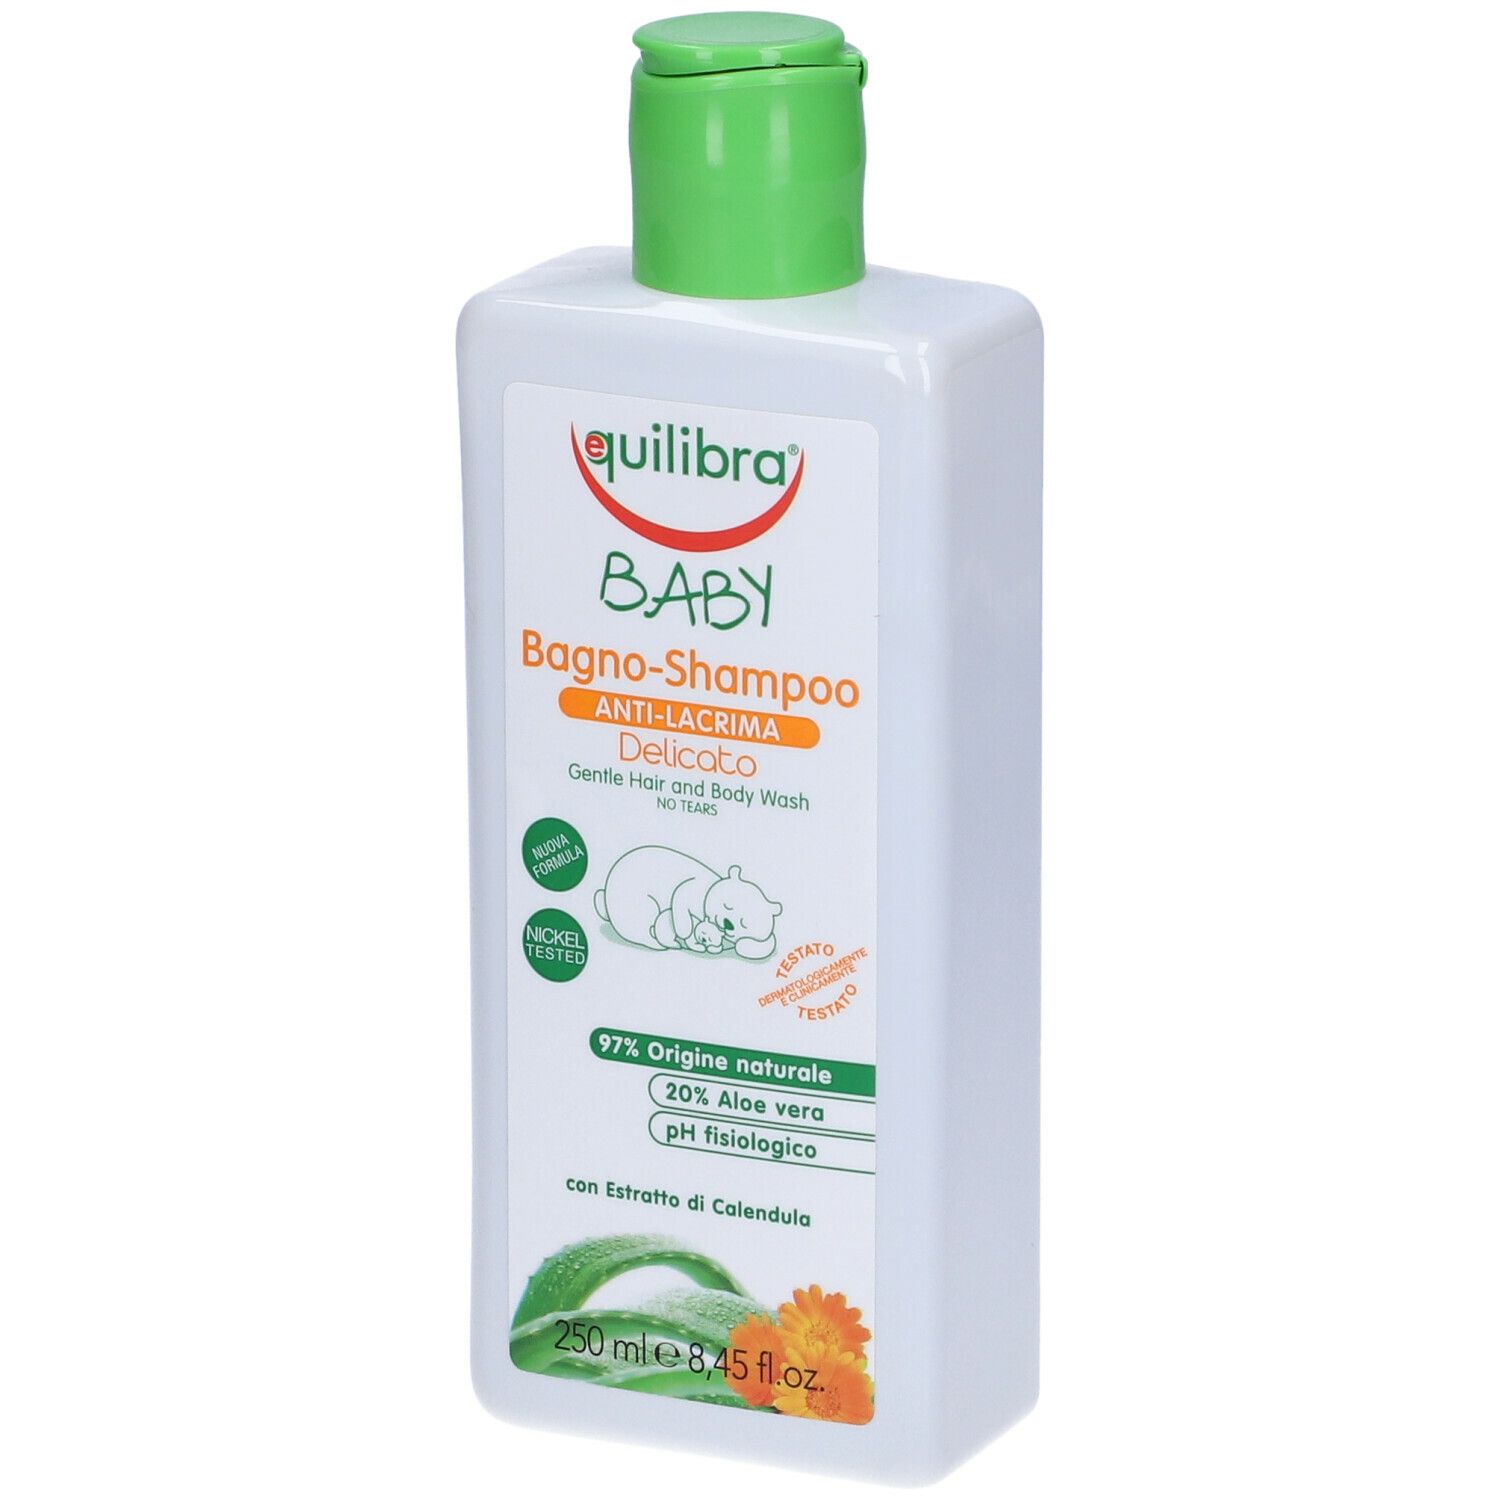 Equilibra® Baby Bagno-Shampoo Anti-lacrima